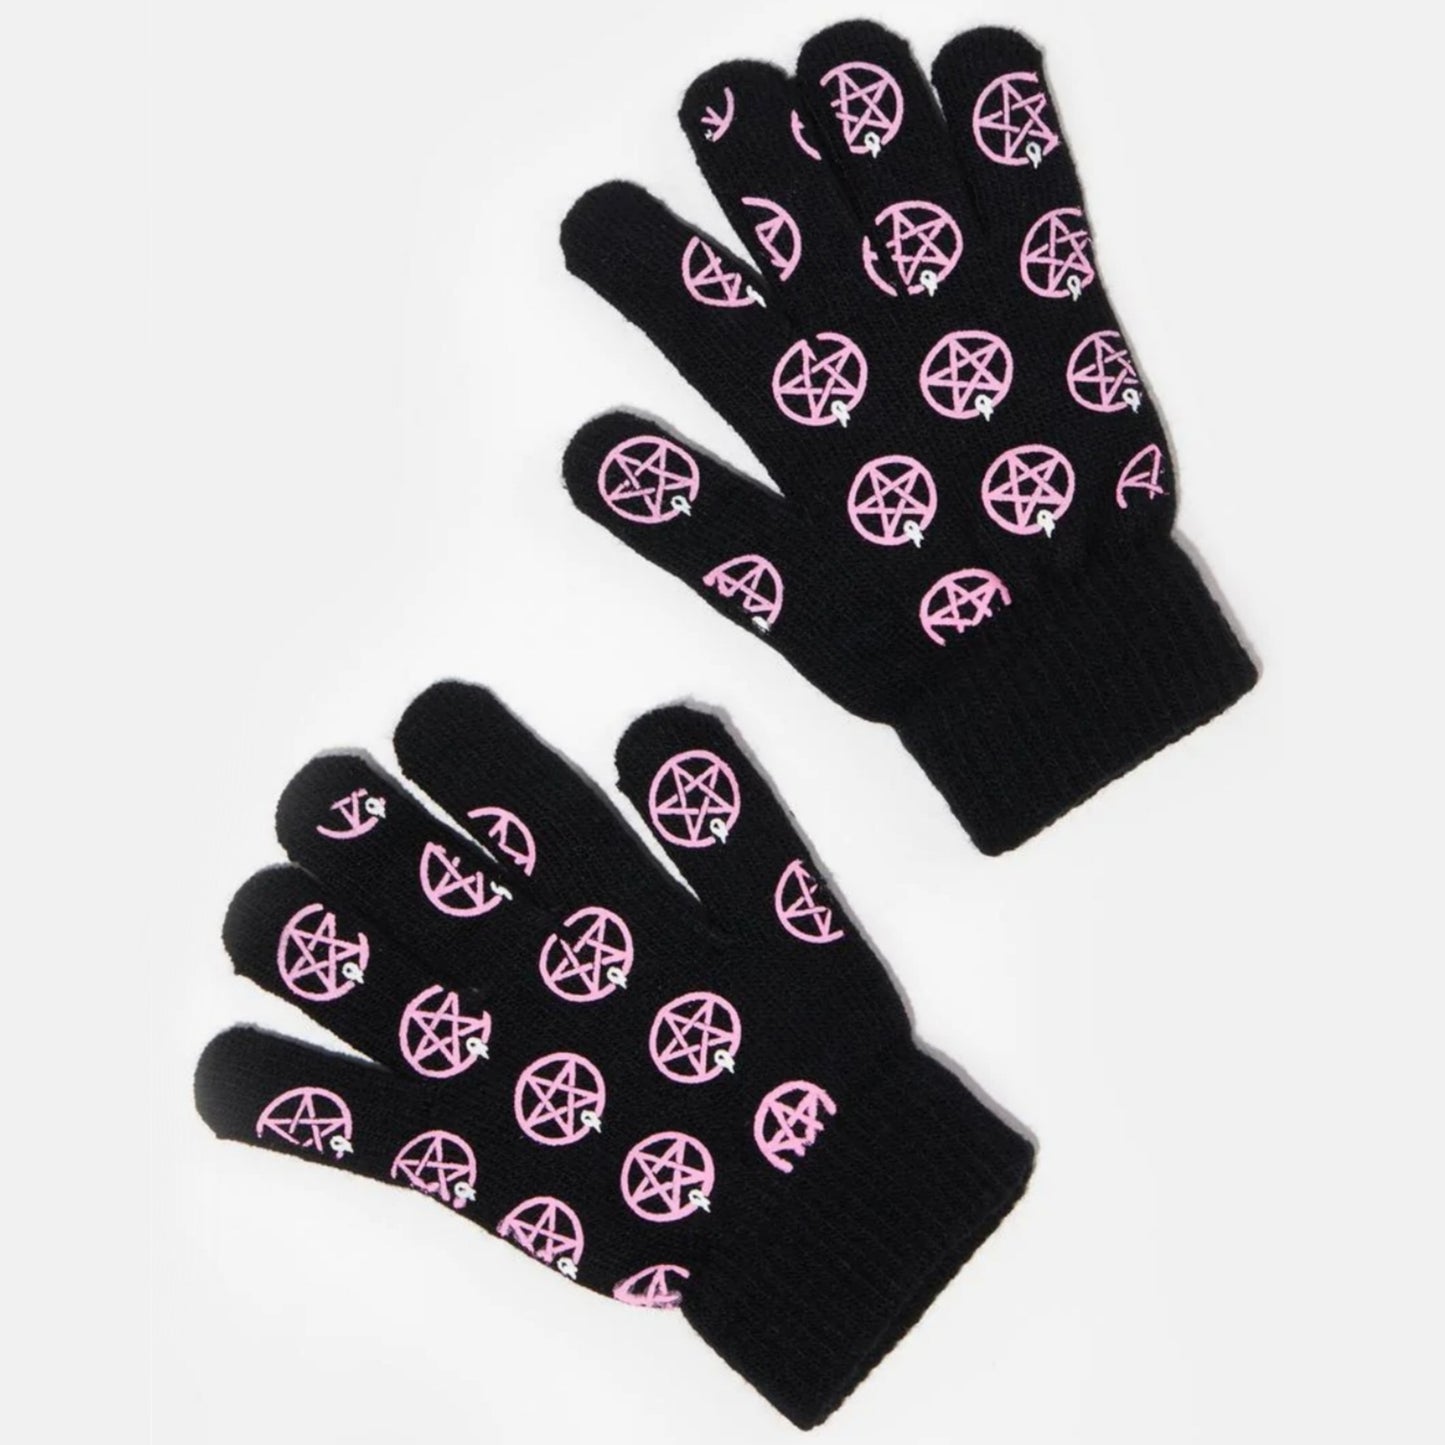 Pentagram Knit Gloves | Black Pink Knit Ribbed Cuffs - Too Fast - Gloves